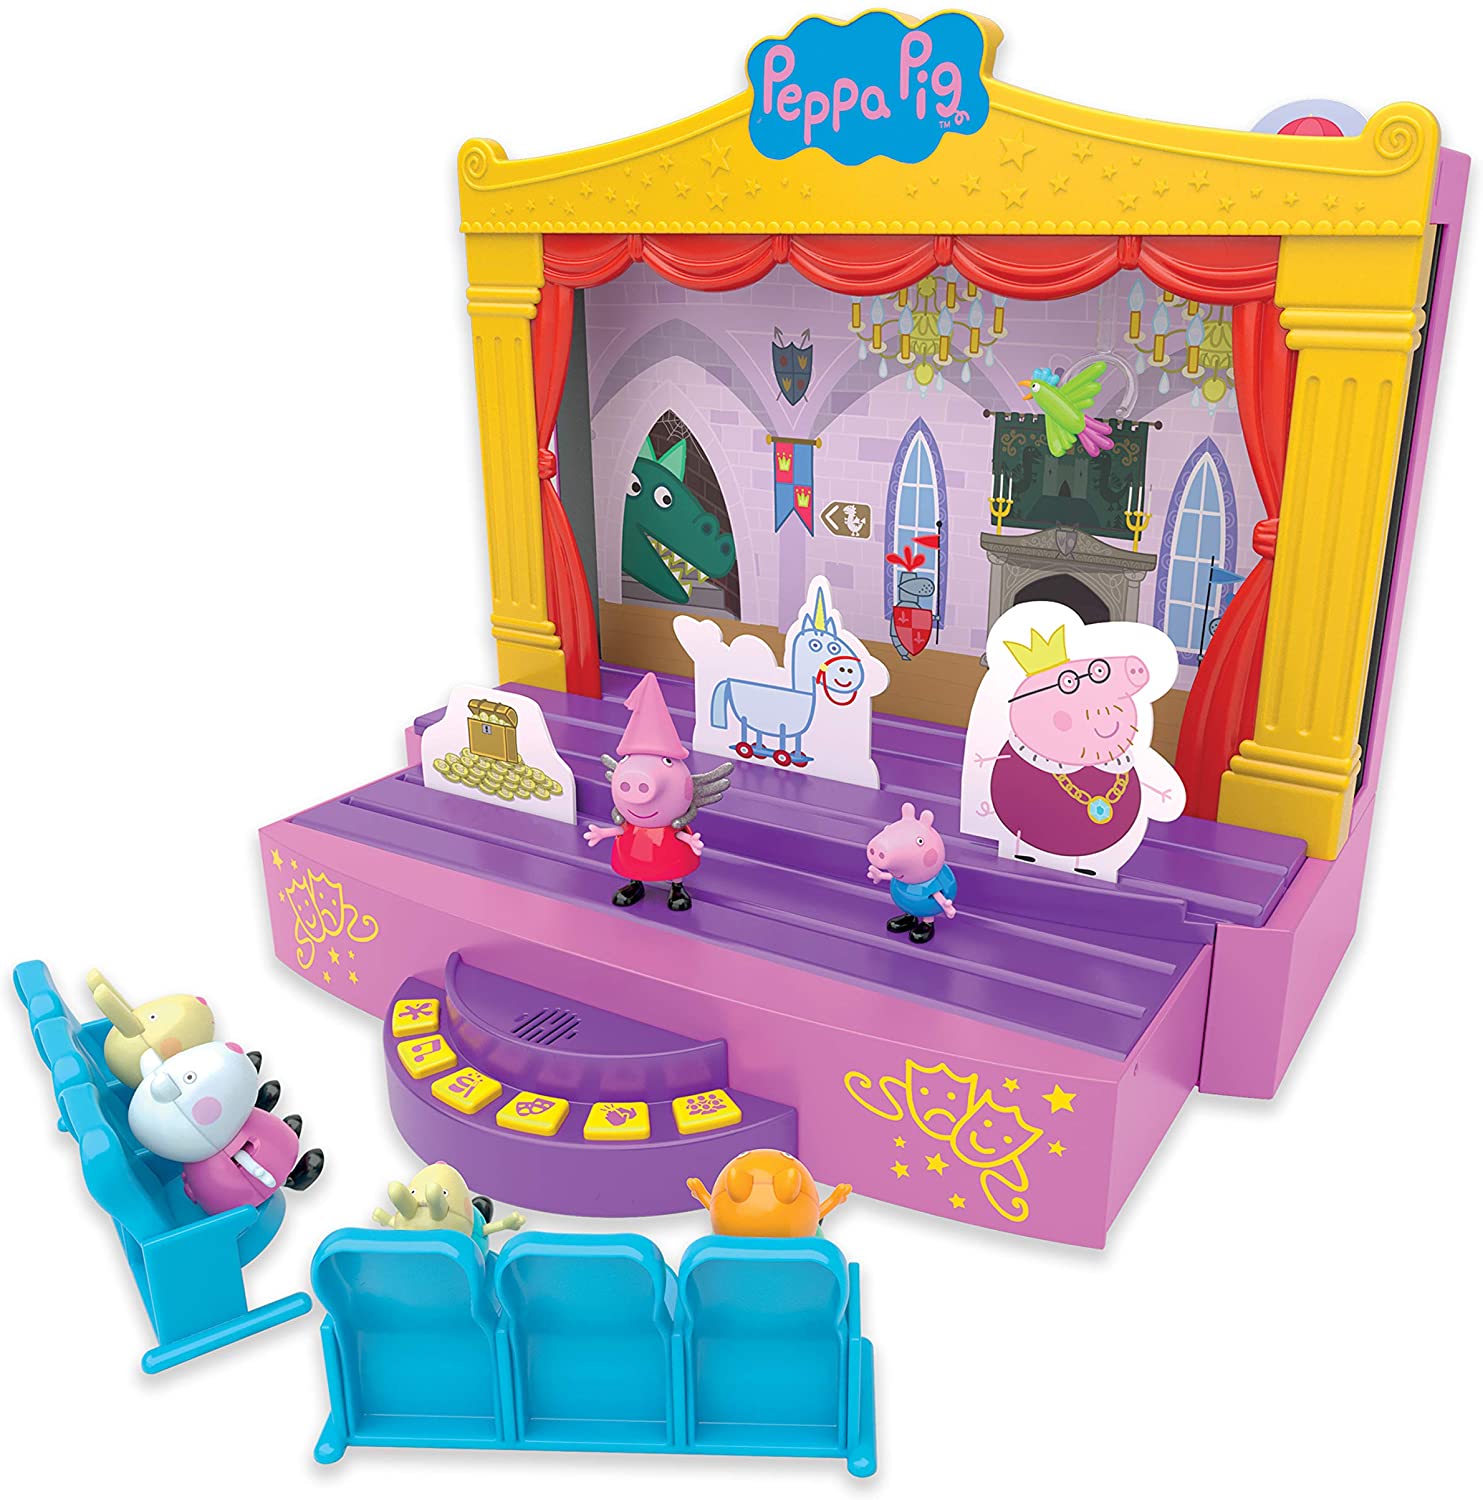 Peppa Pig - Peppas Stage Playset